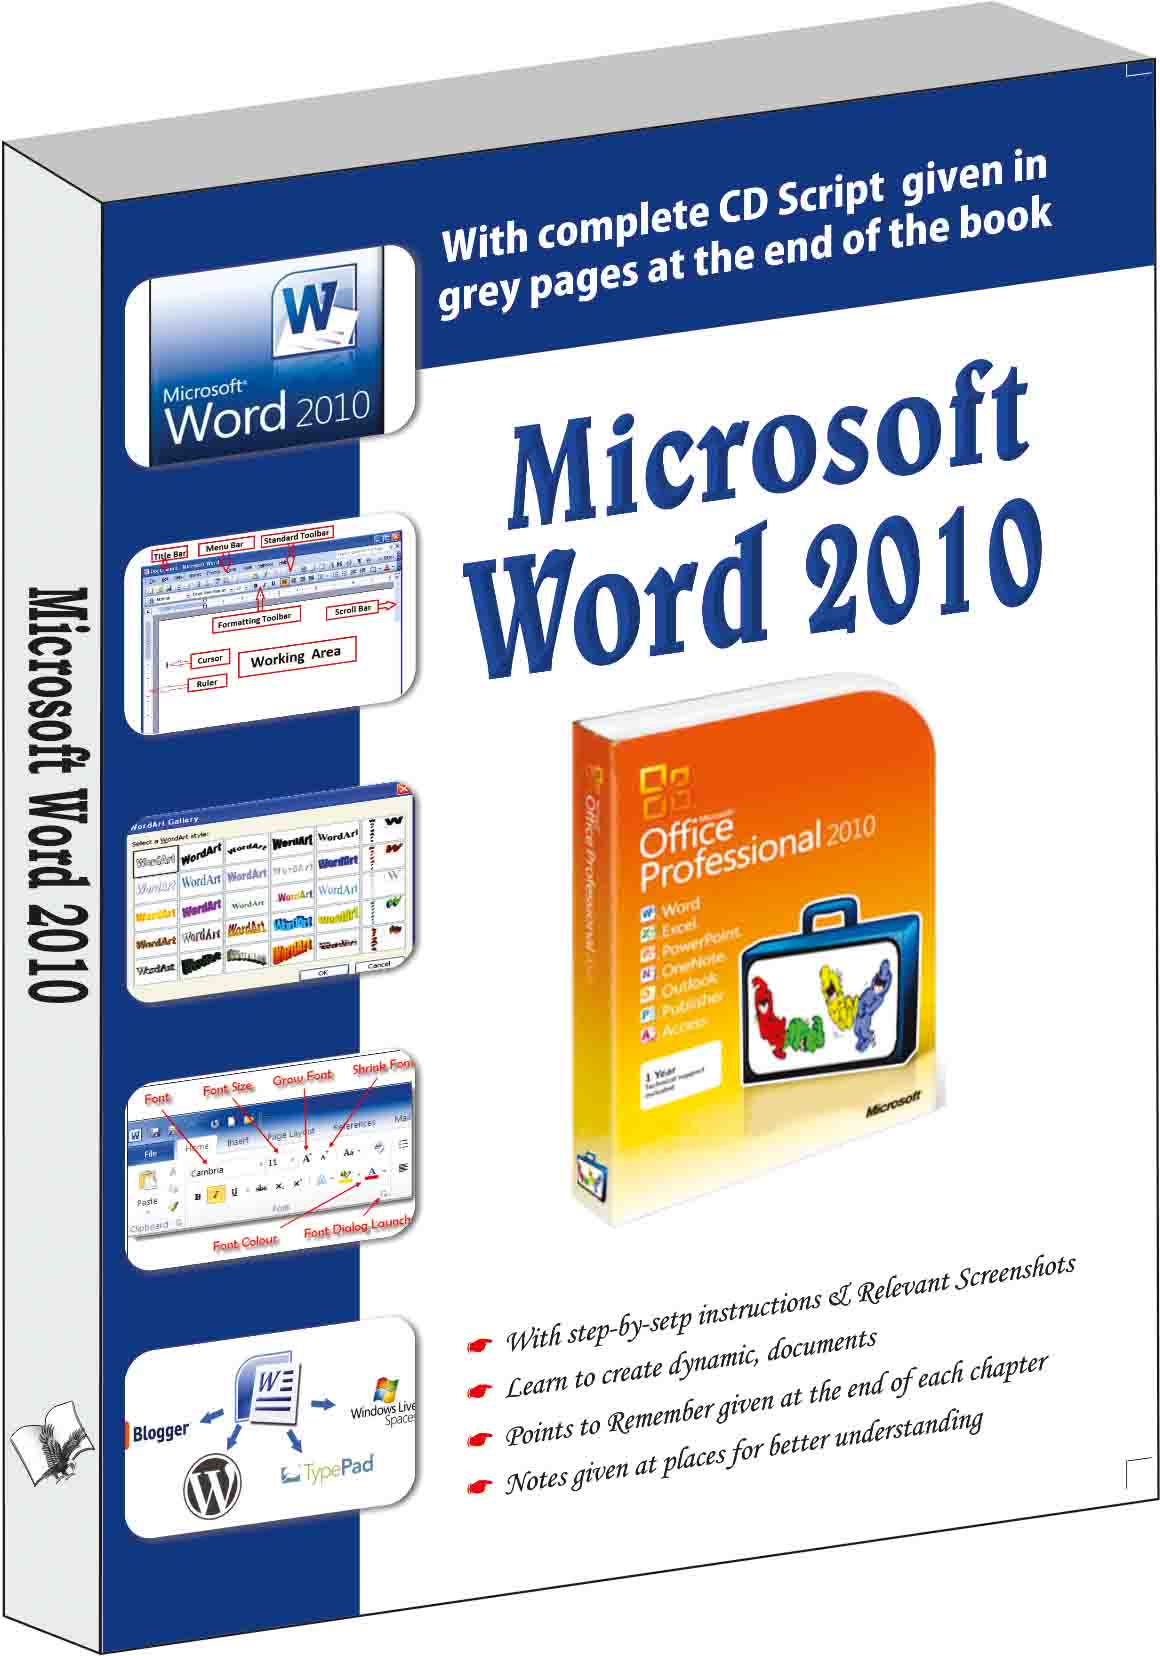 Microsoft word 2010-Develop computer skills: be future ready